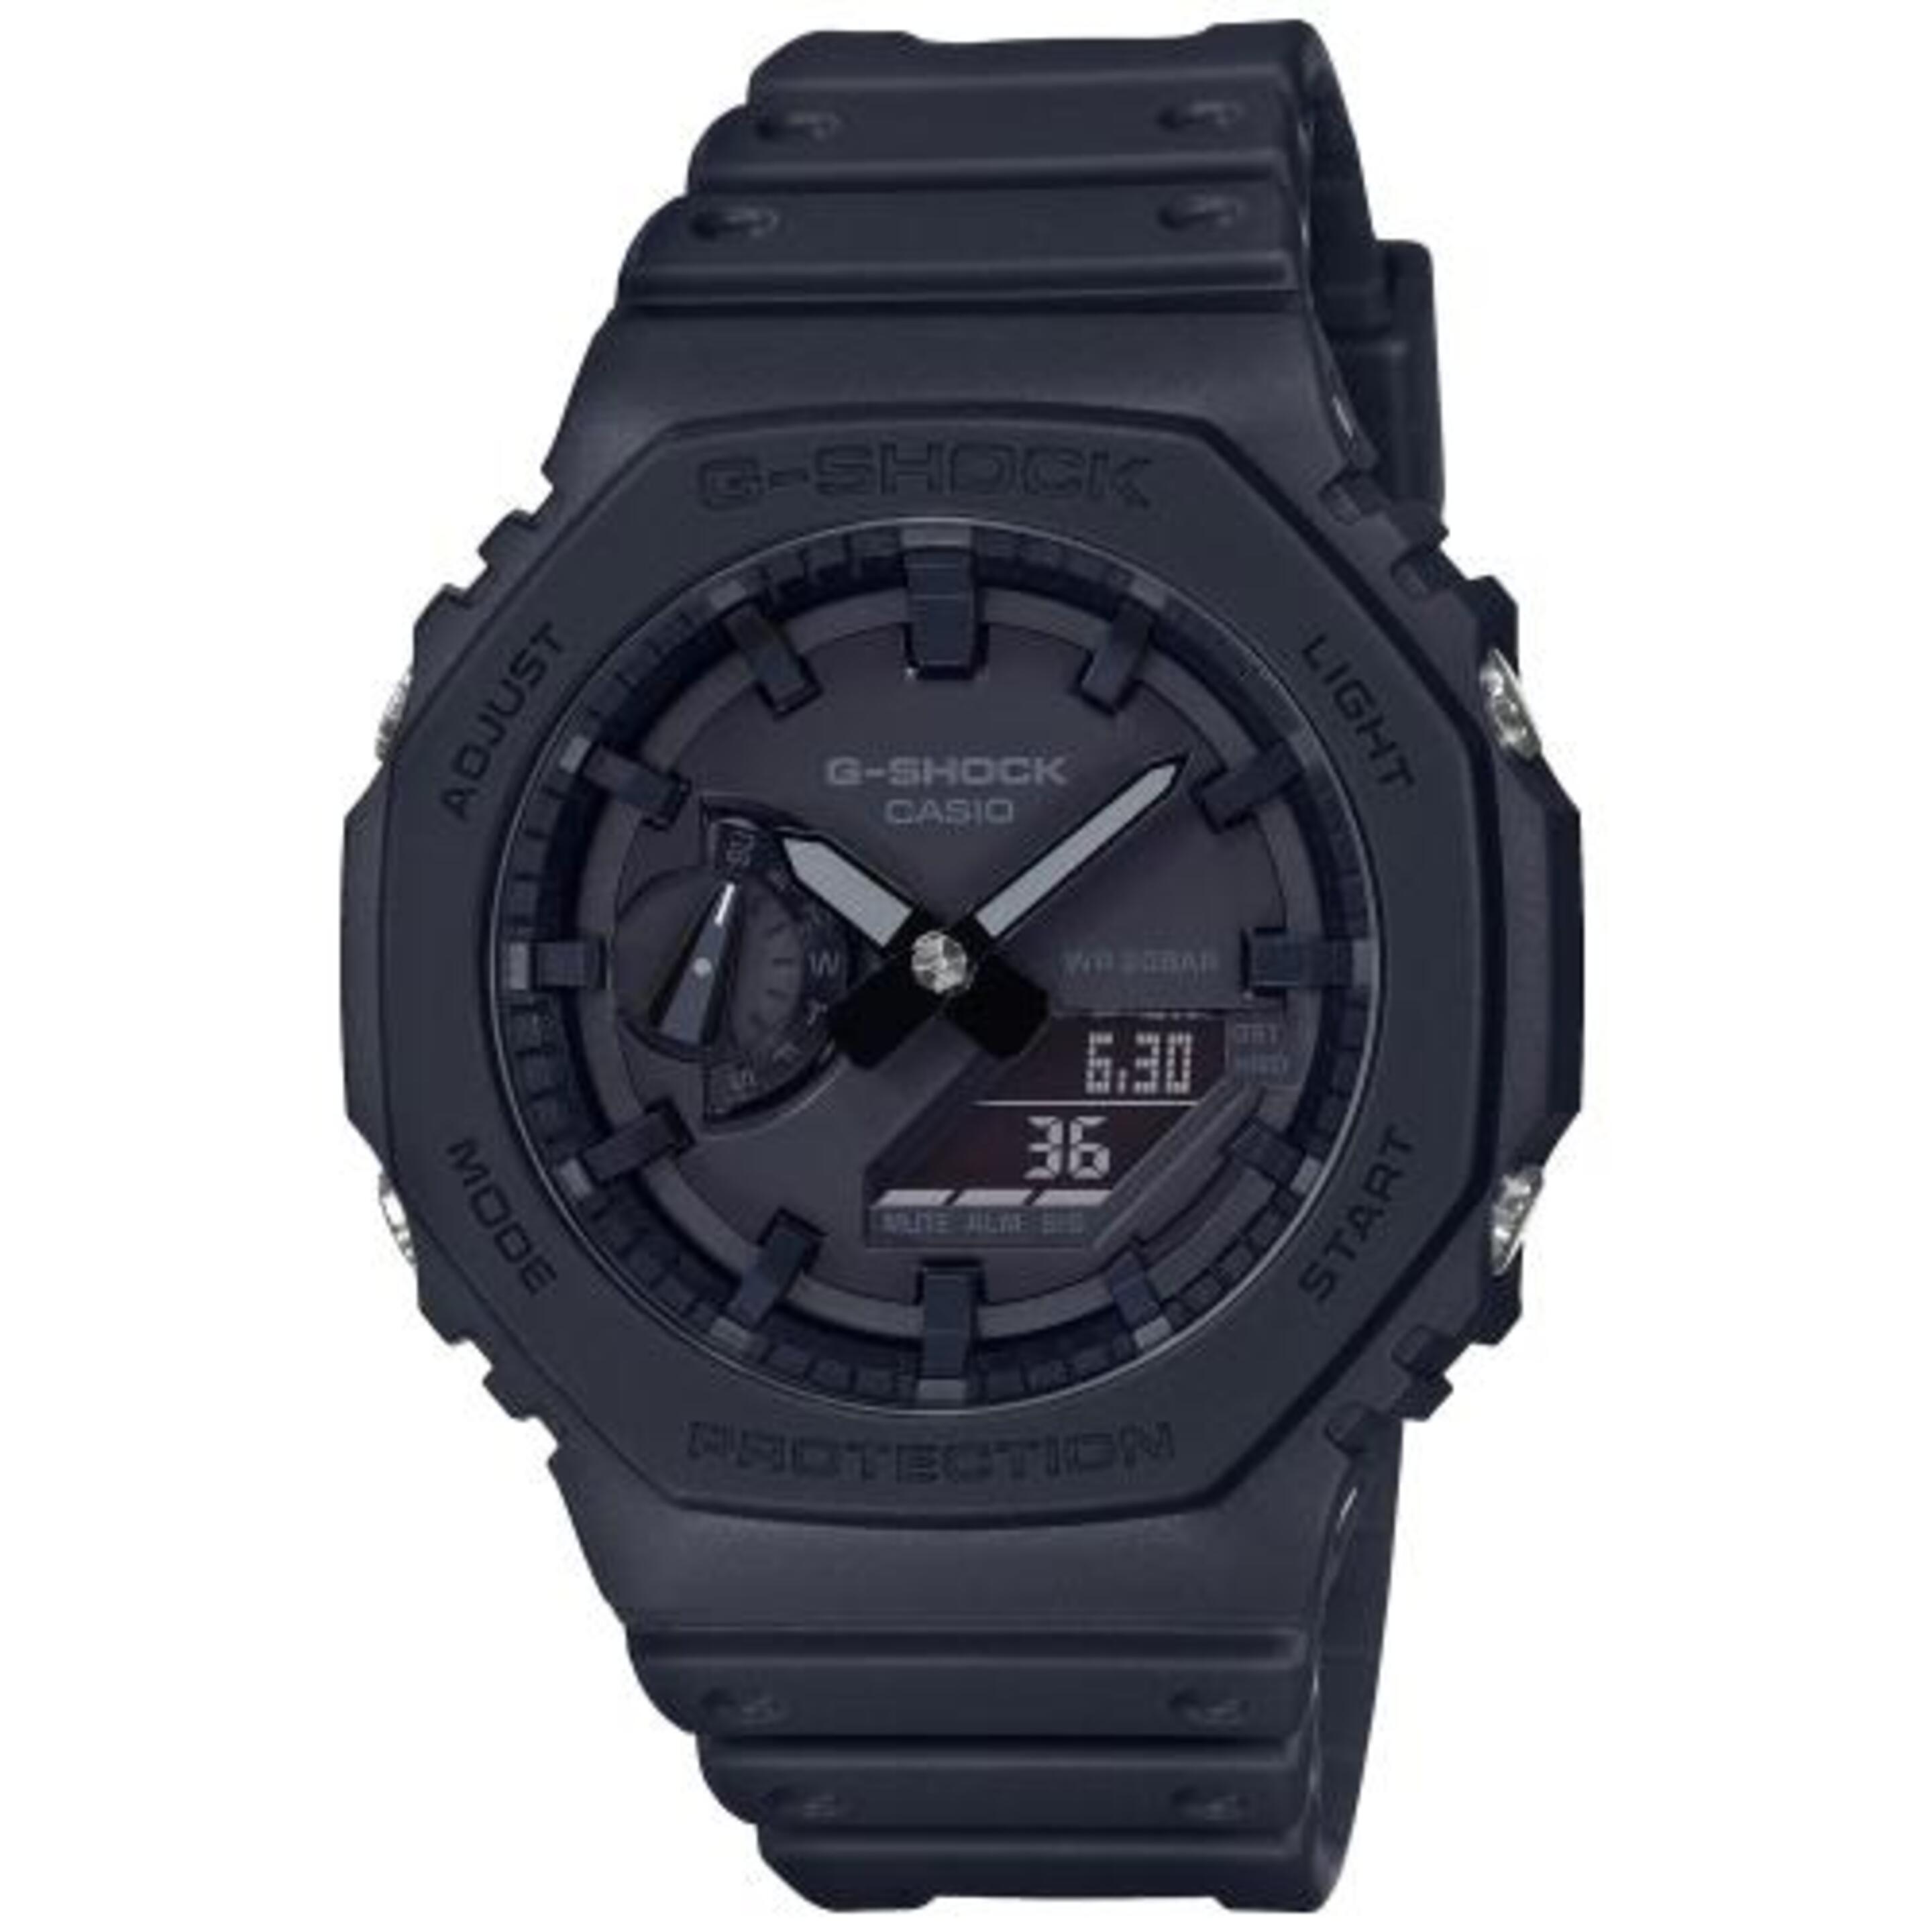 Reloj Casio G-shock Ga-2100-1a1er - negro - 